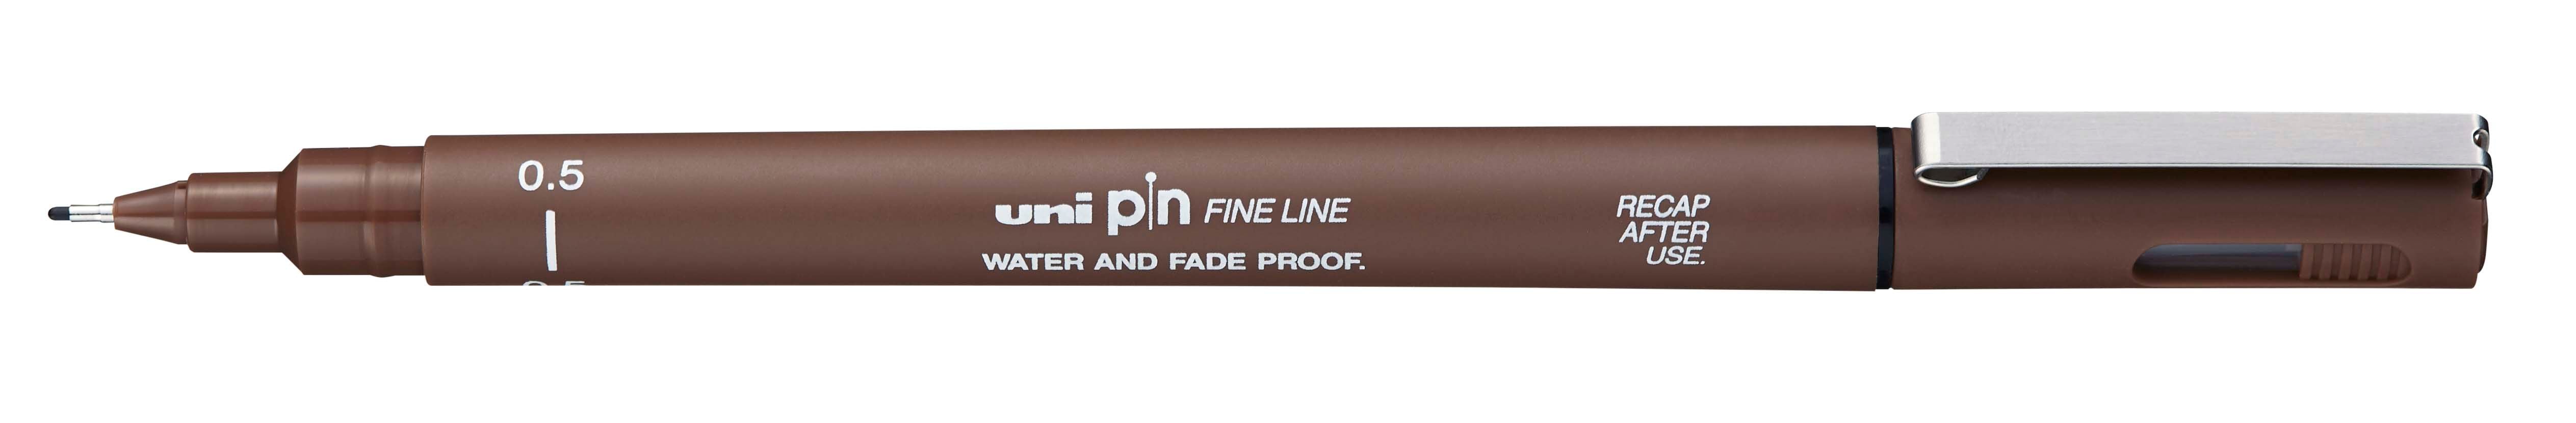 Uni Pin Fine Line Sepia Waterproof Drawing Pen. The Uni Pin pen range uses fade proof, waterproof pigment ink